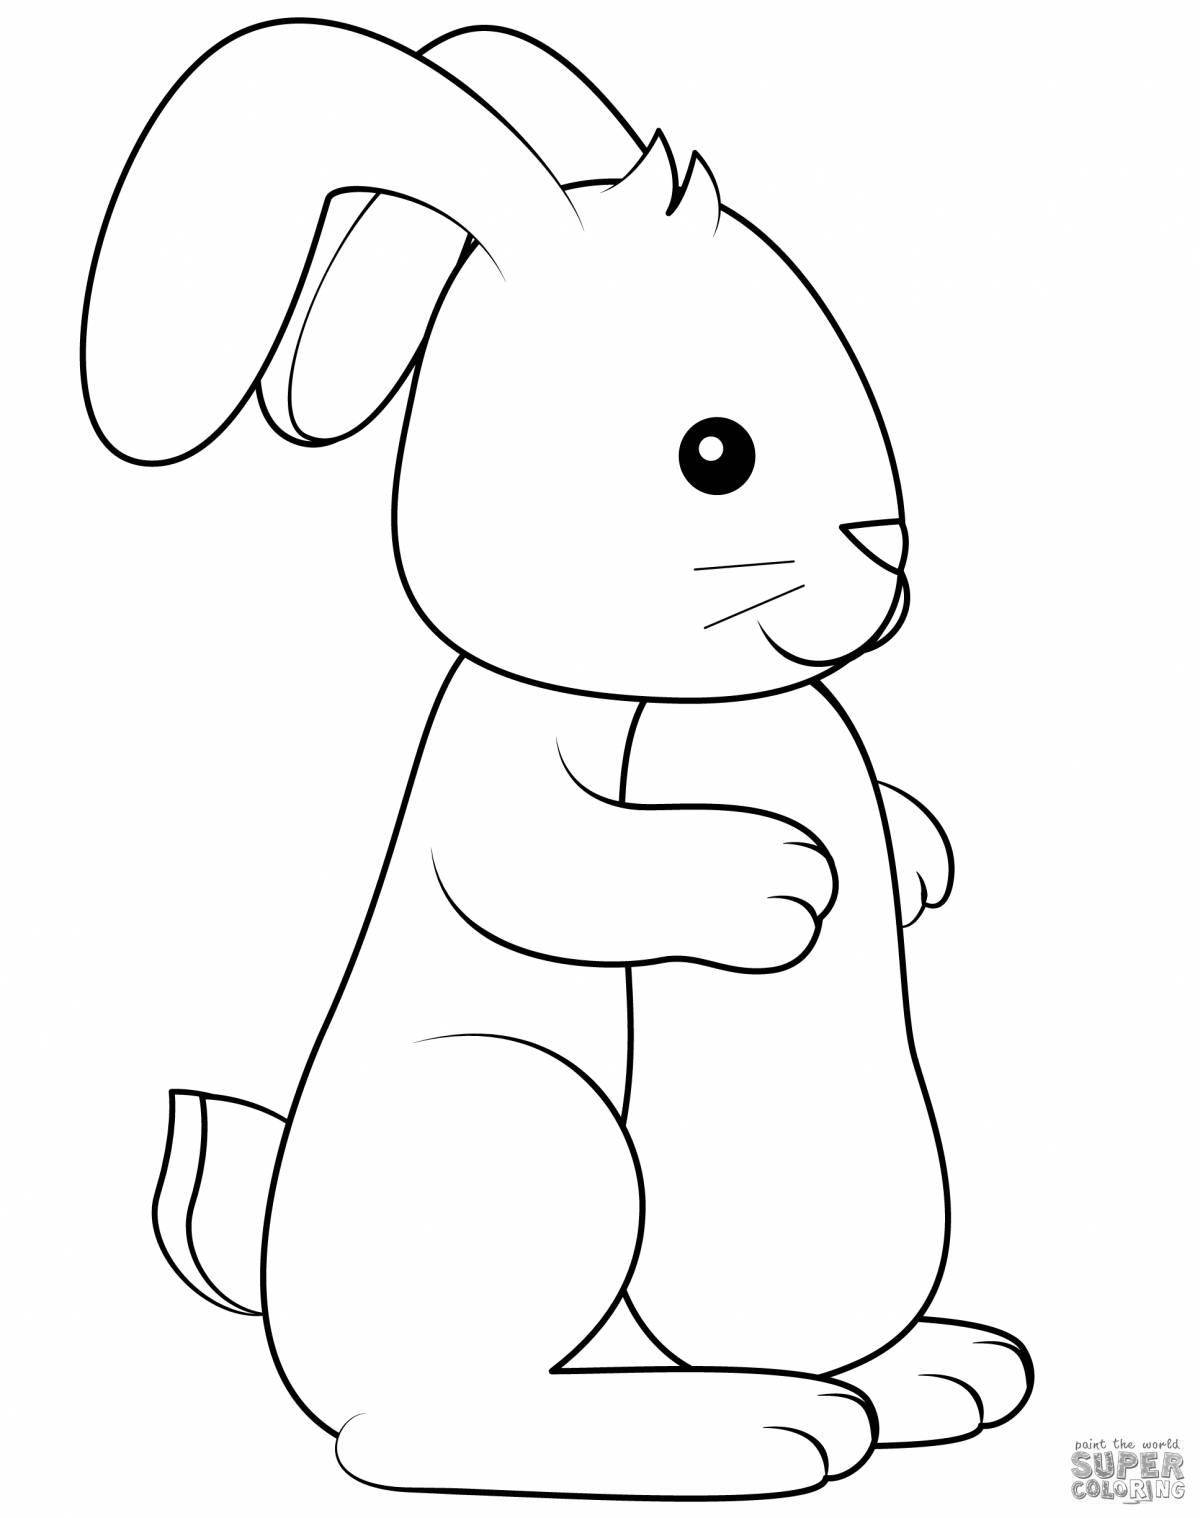 Coloring page playful angora rabbit